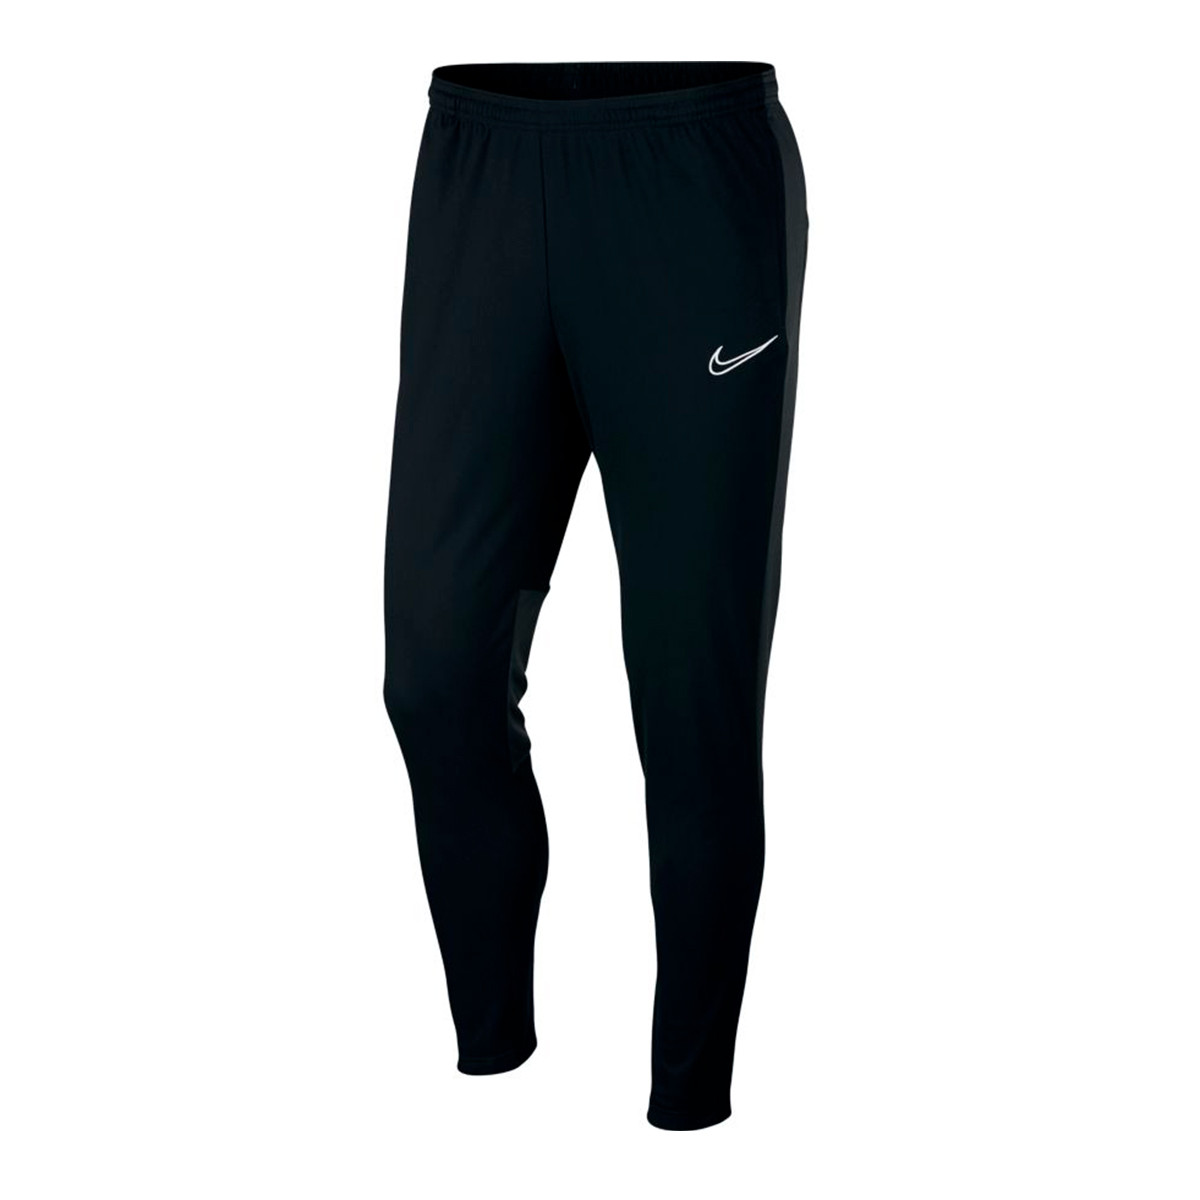 Long pants Nike Dry Academy KPZ Black 